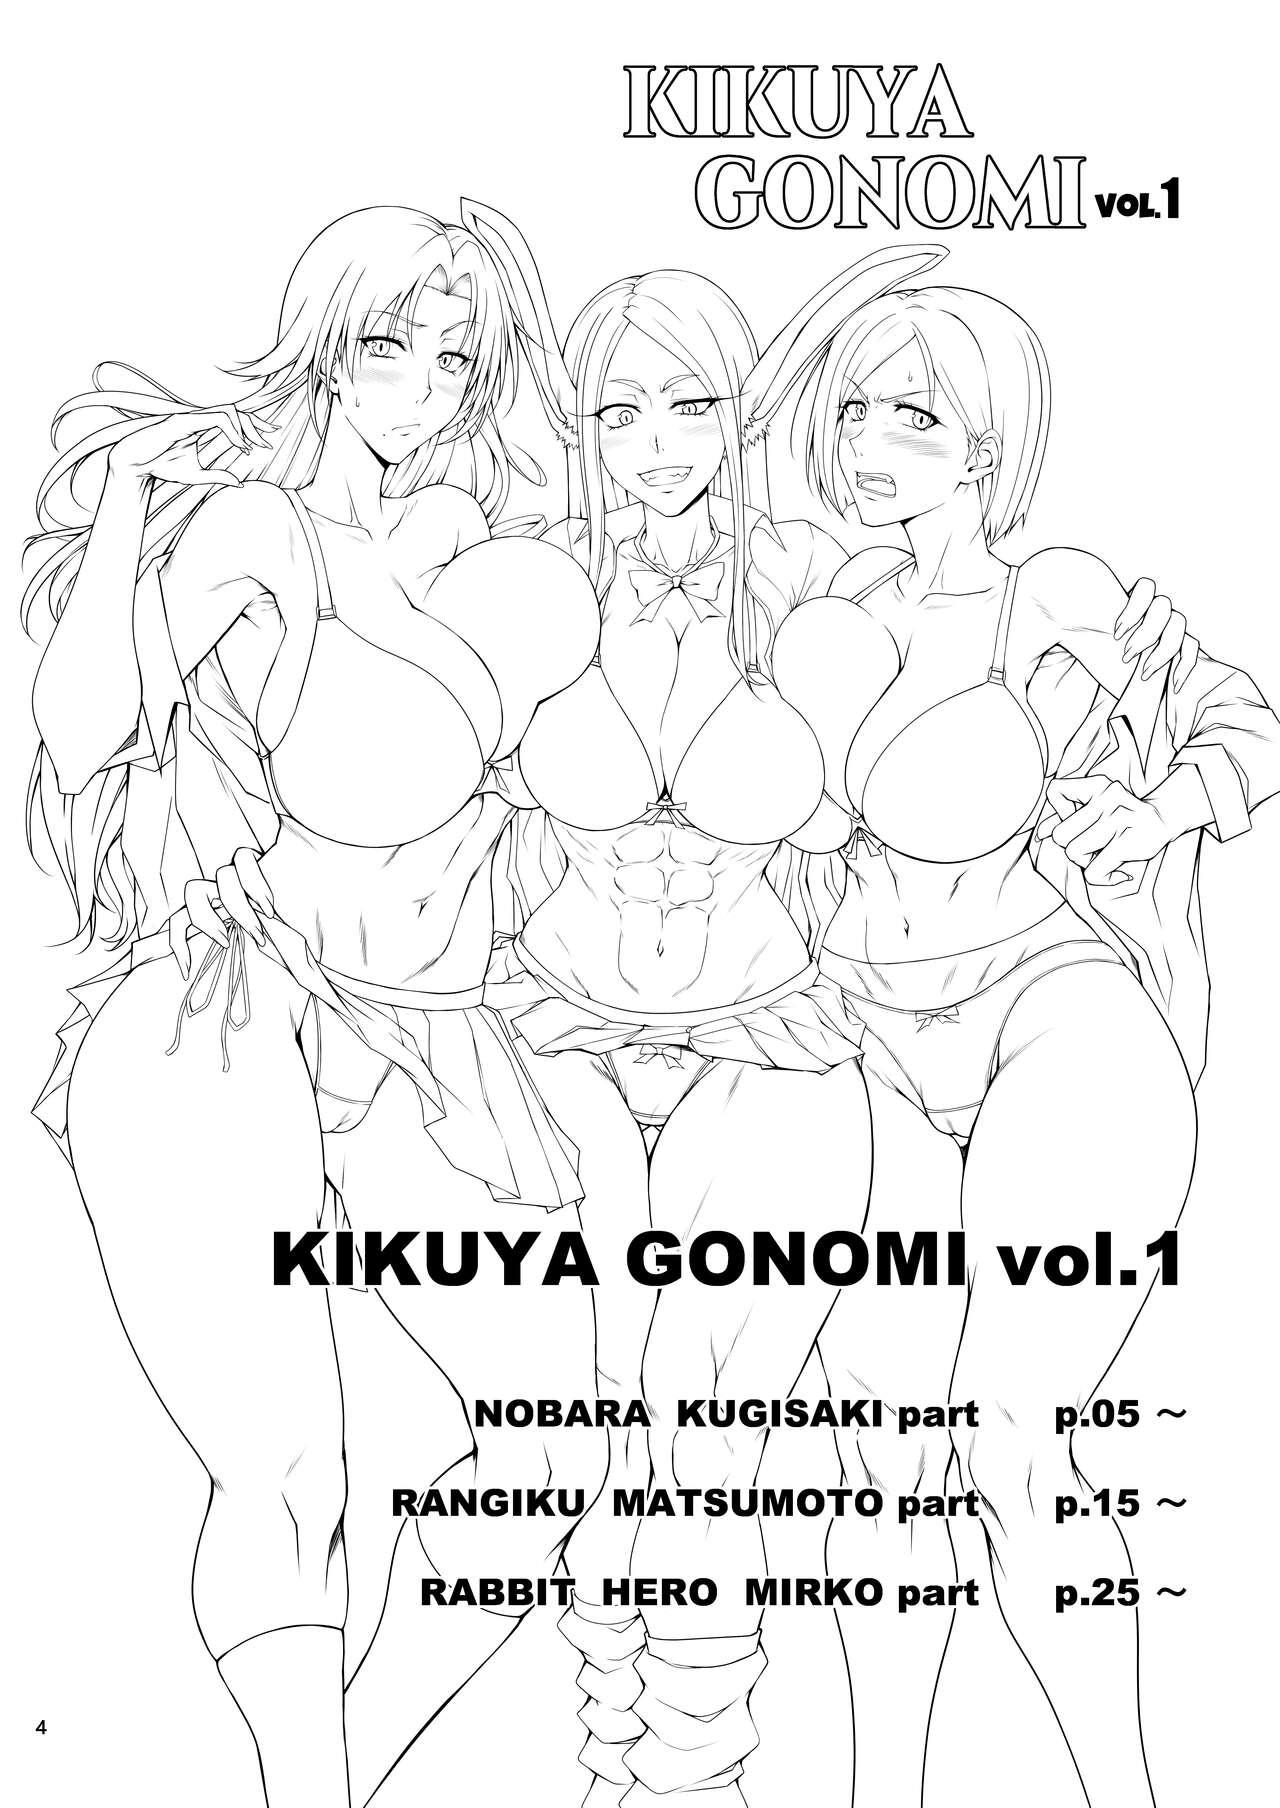 KIKUYA GONOMI vol.1 1